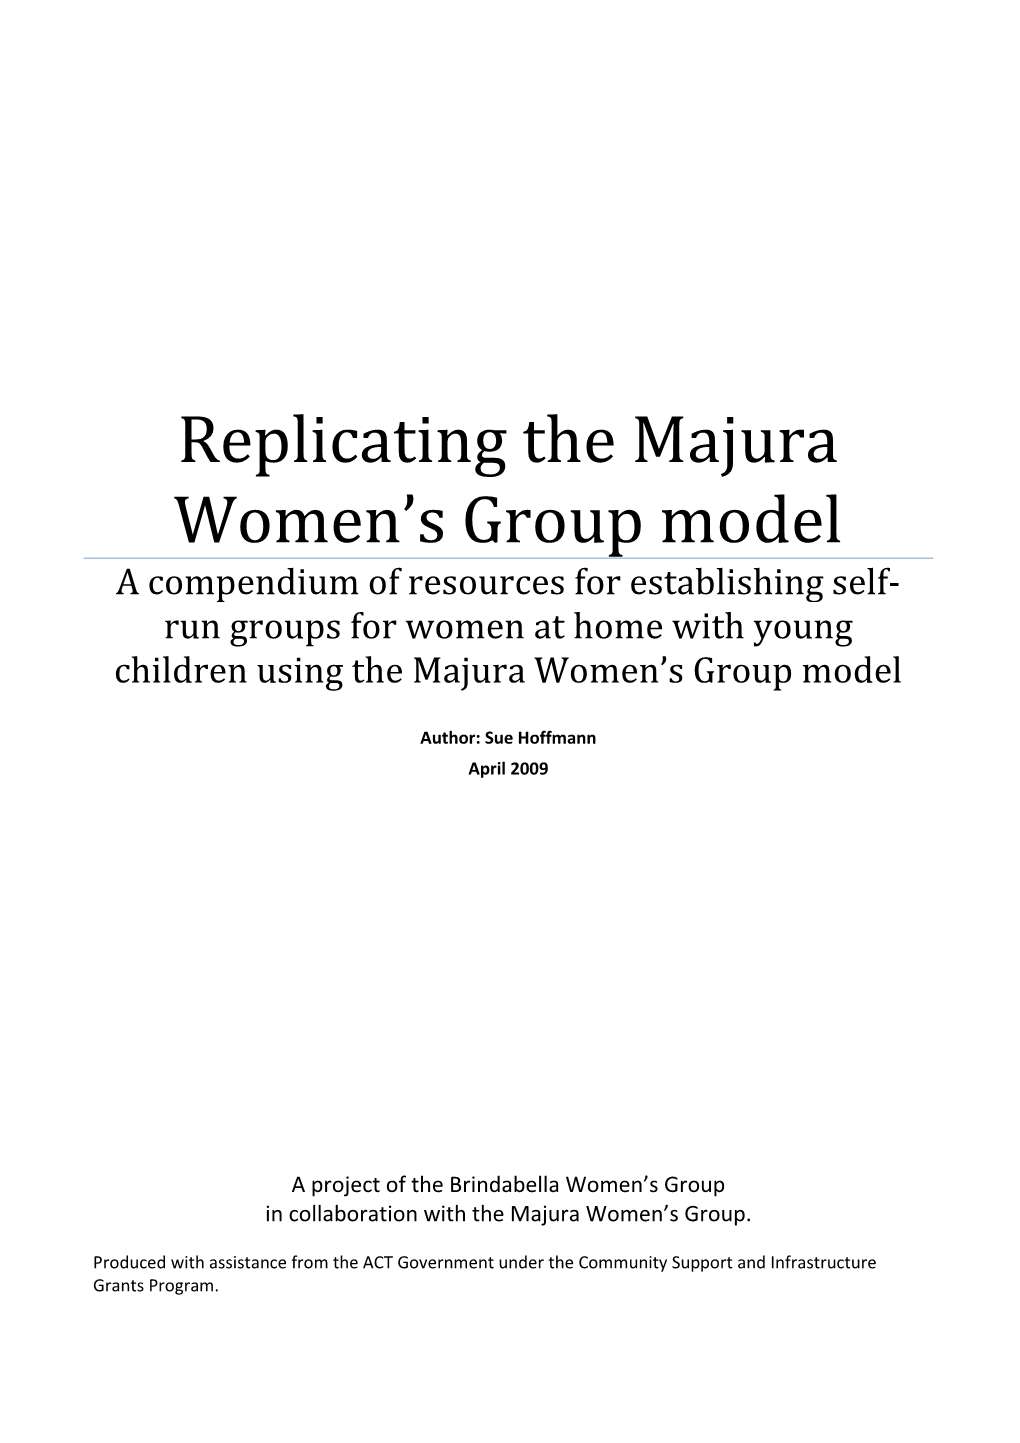 Replicating the Majura Women's Group Model